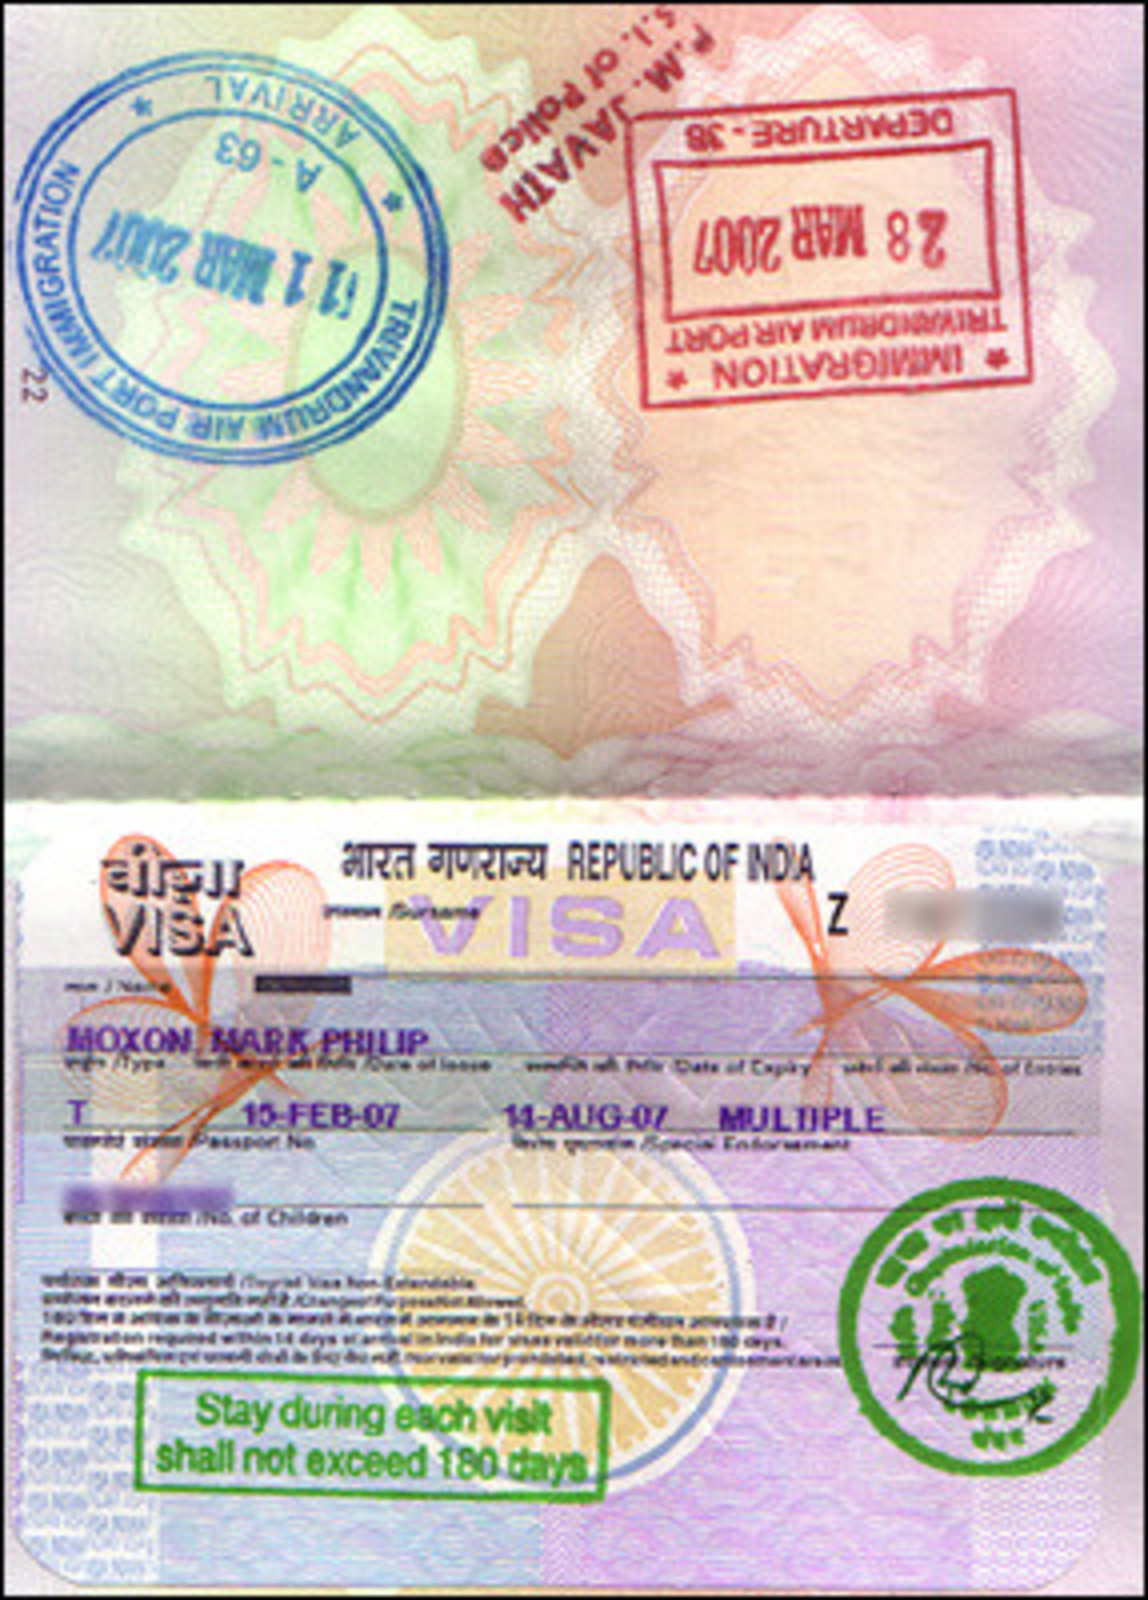 6 month tourist visa for india